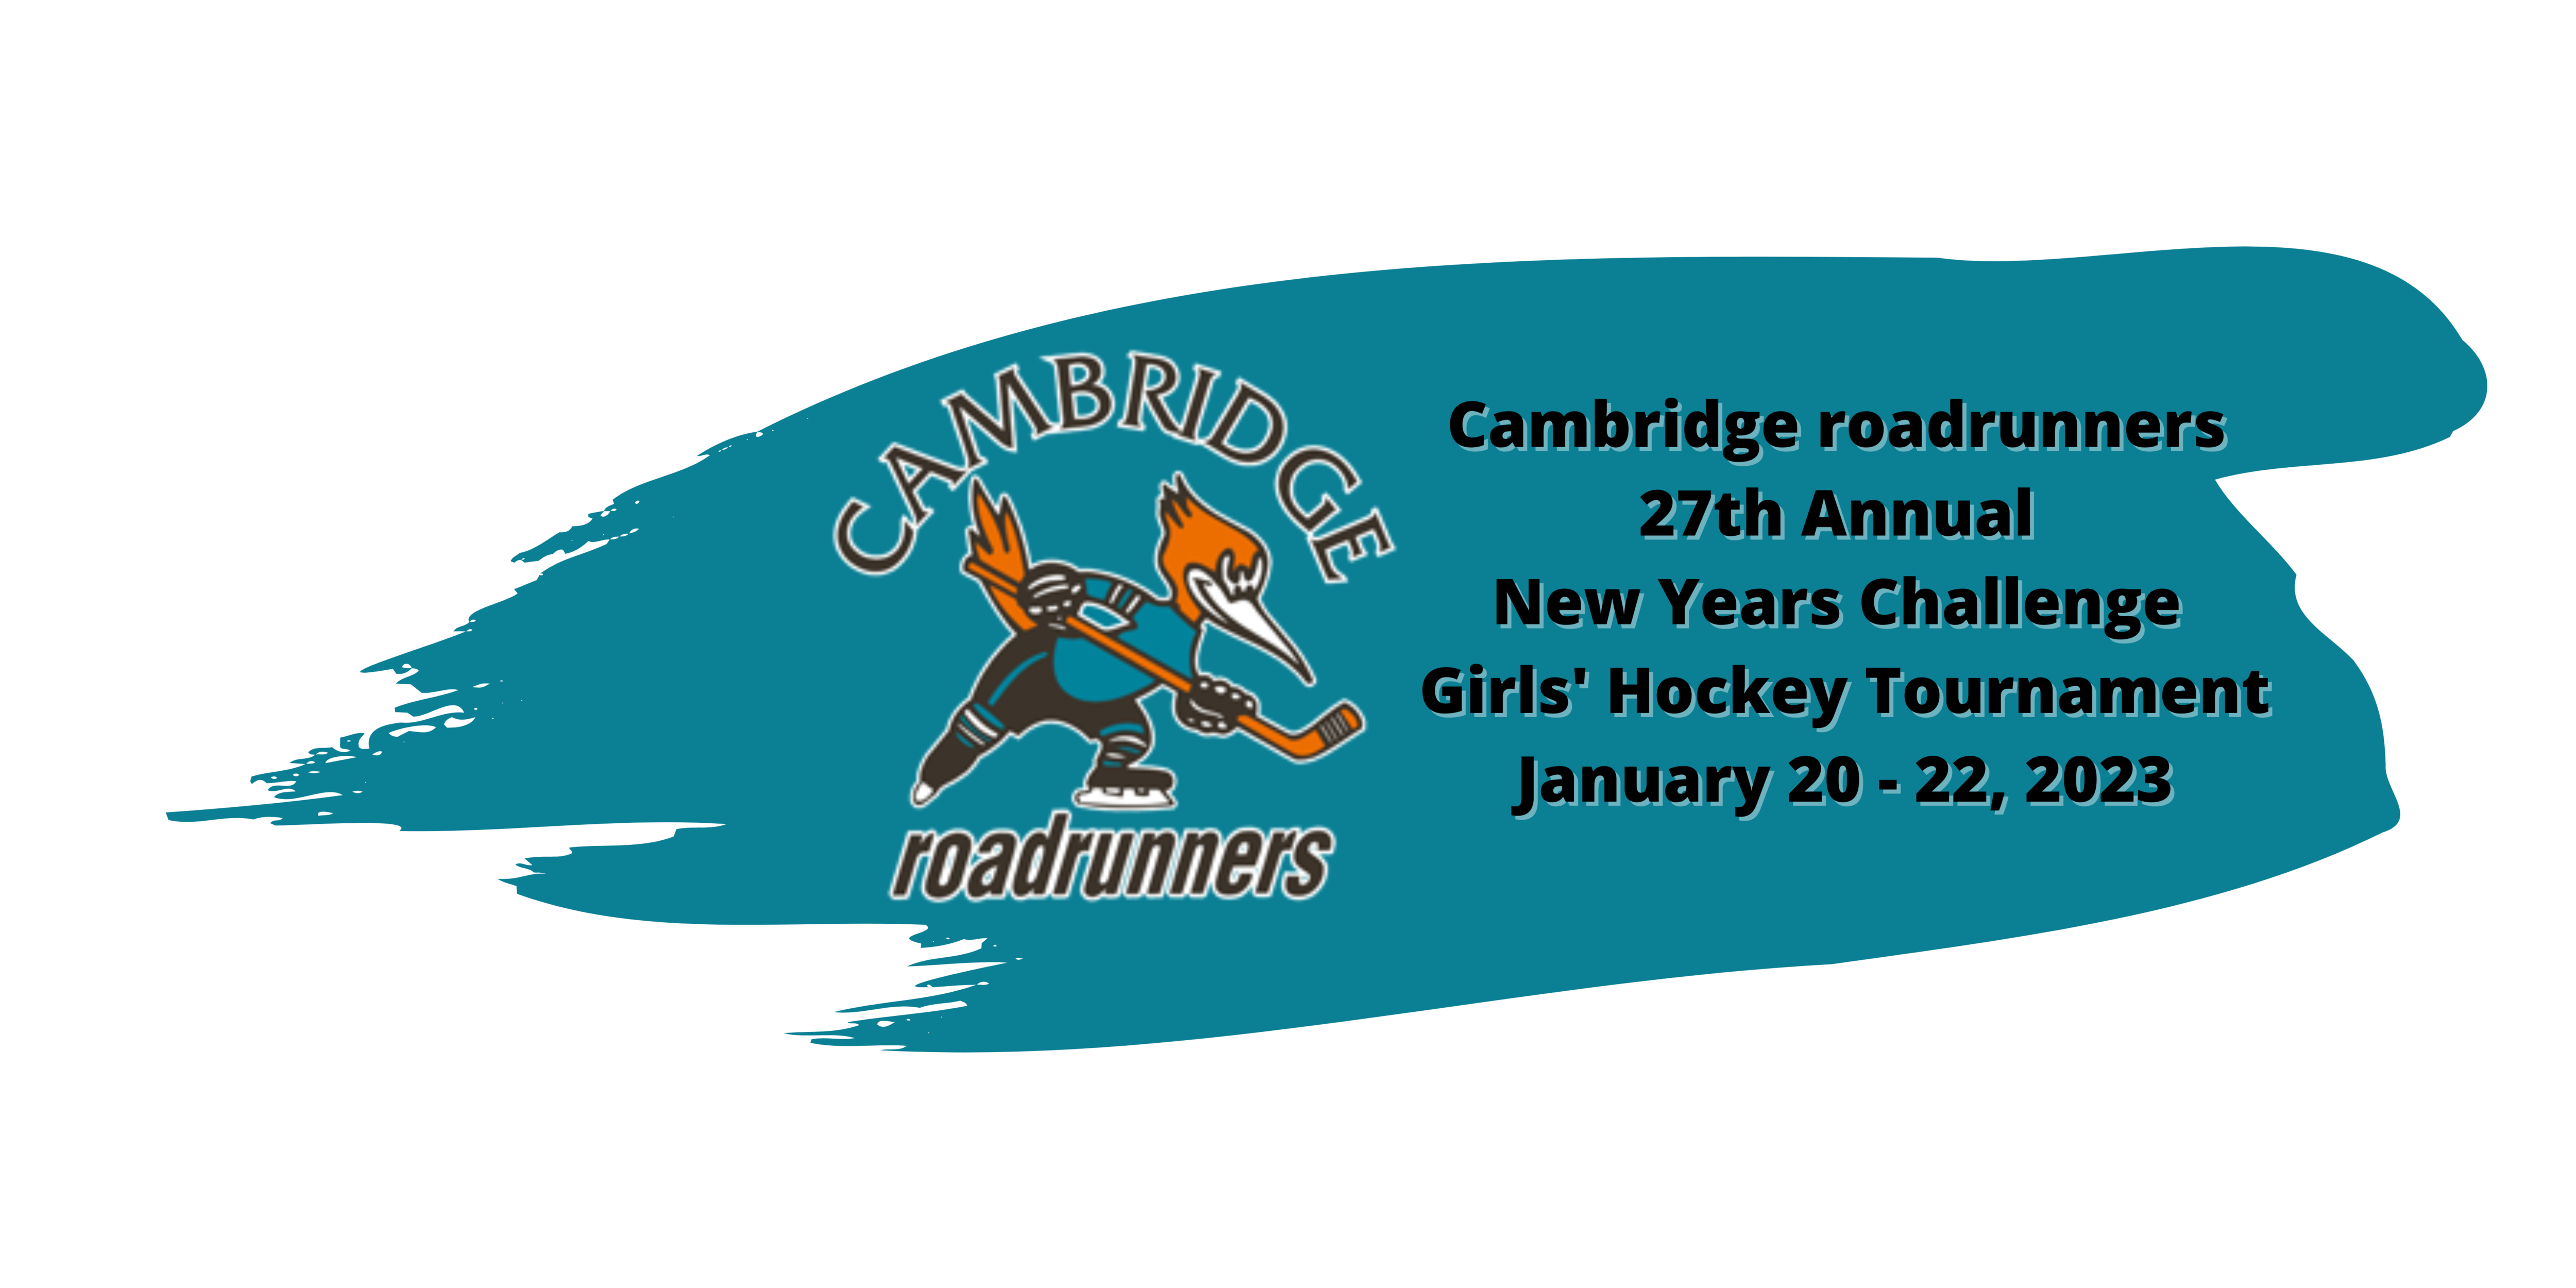 Cambridge roadrunners 27th Annual Girls' Hockey Tournament